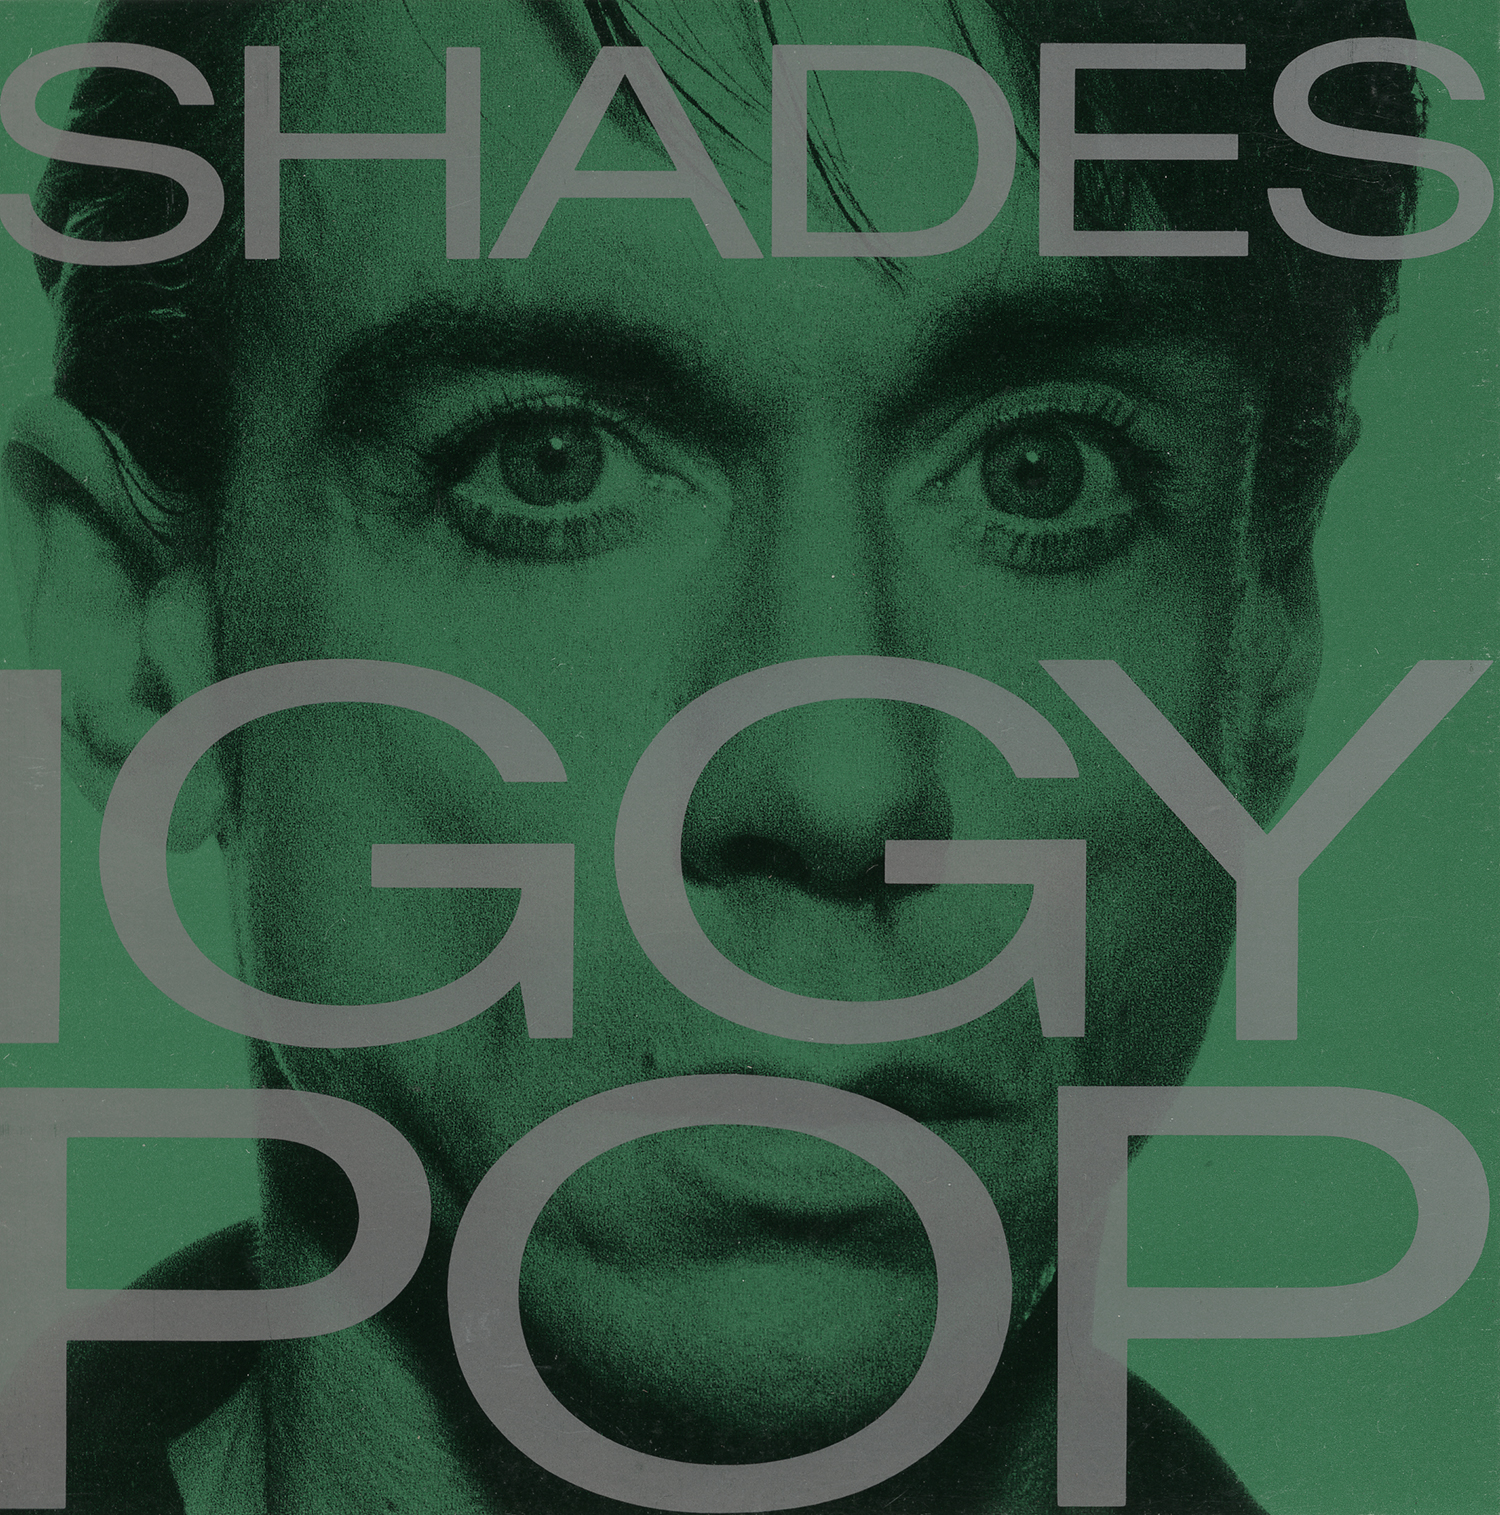 iggy pop _ shades